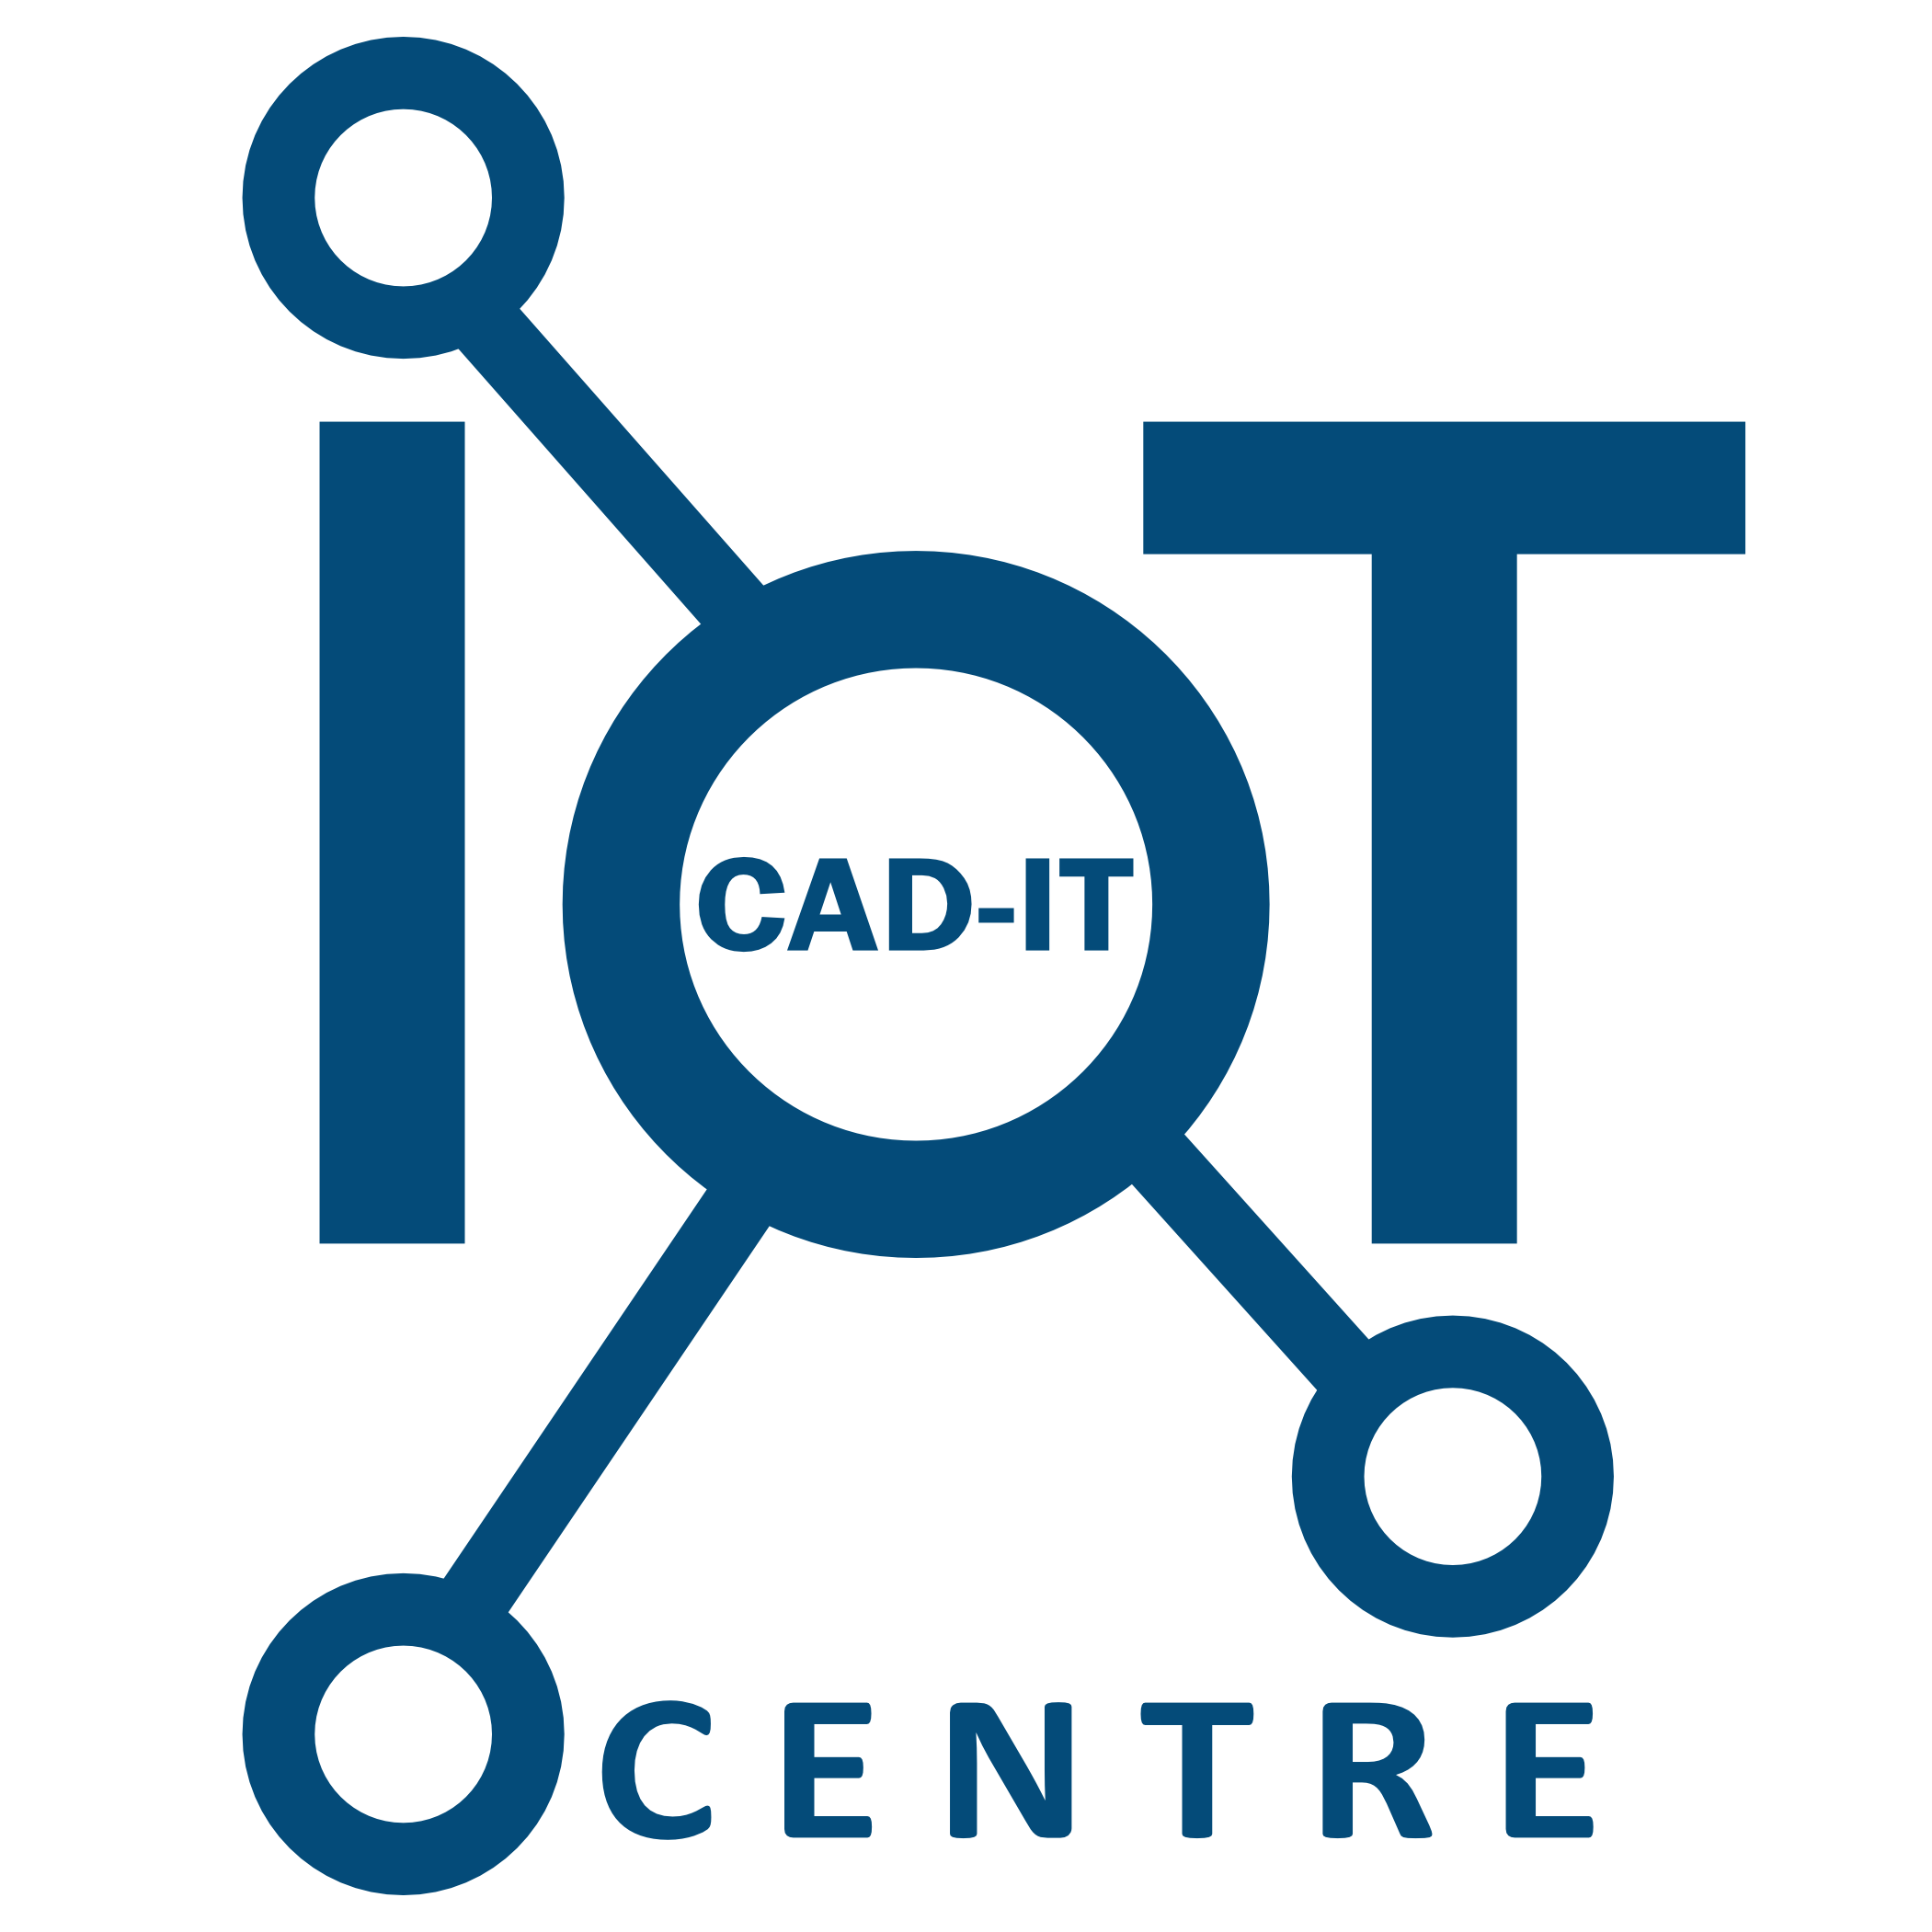 Cad-it Iot Centre